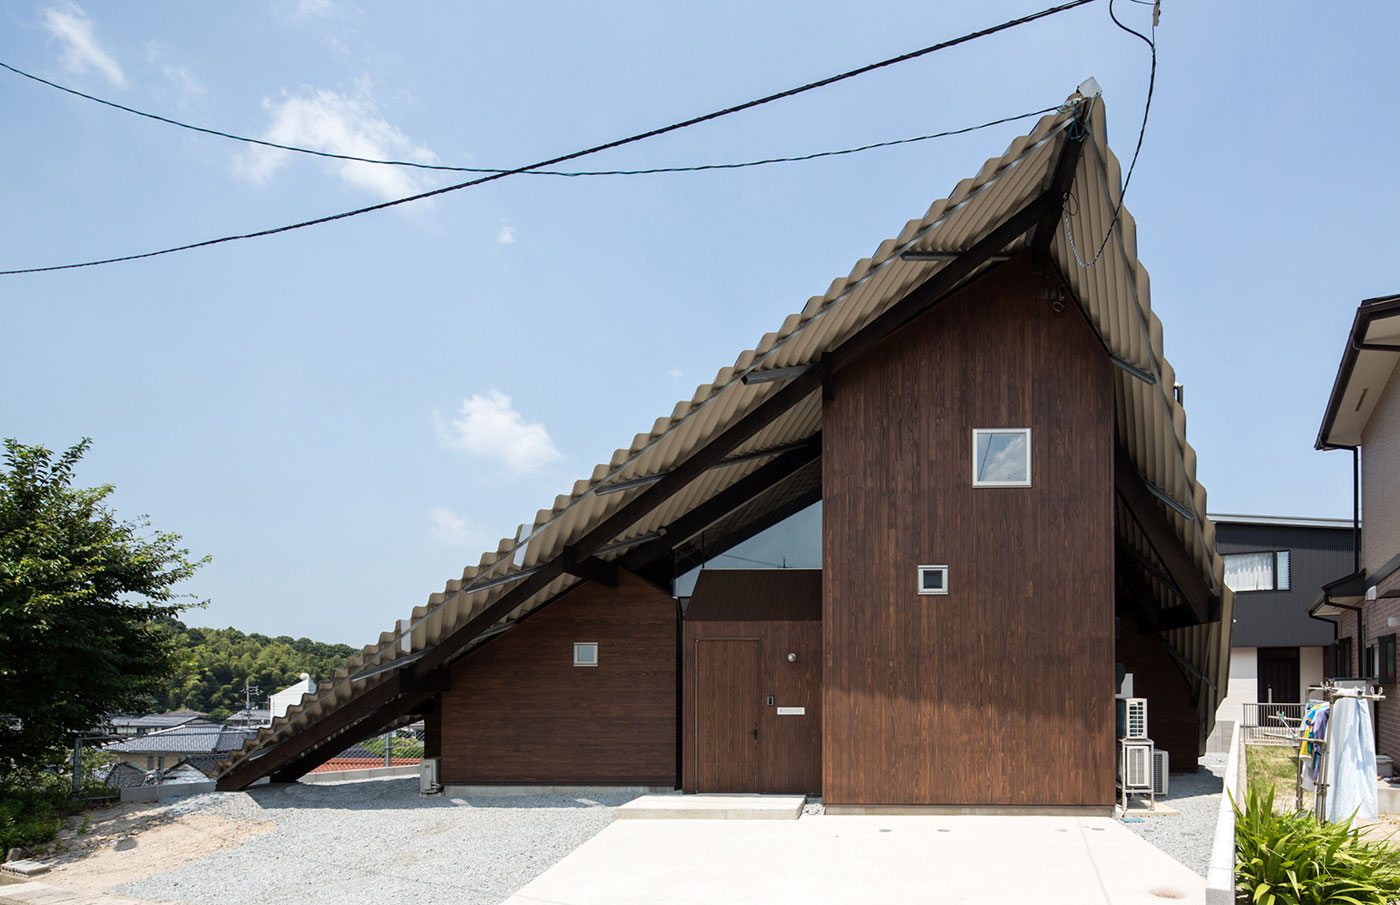 Architects: Y+M Design Office. Location: Yonago, Japan. Photographer: Yohei Sasakura